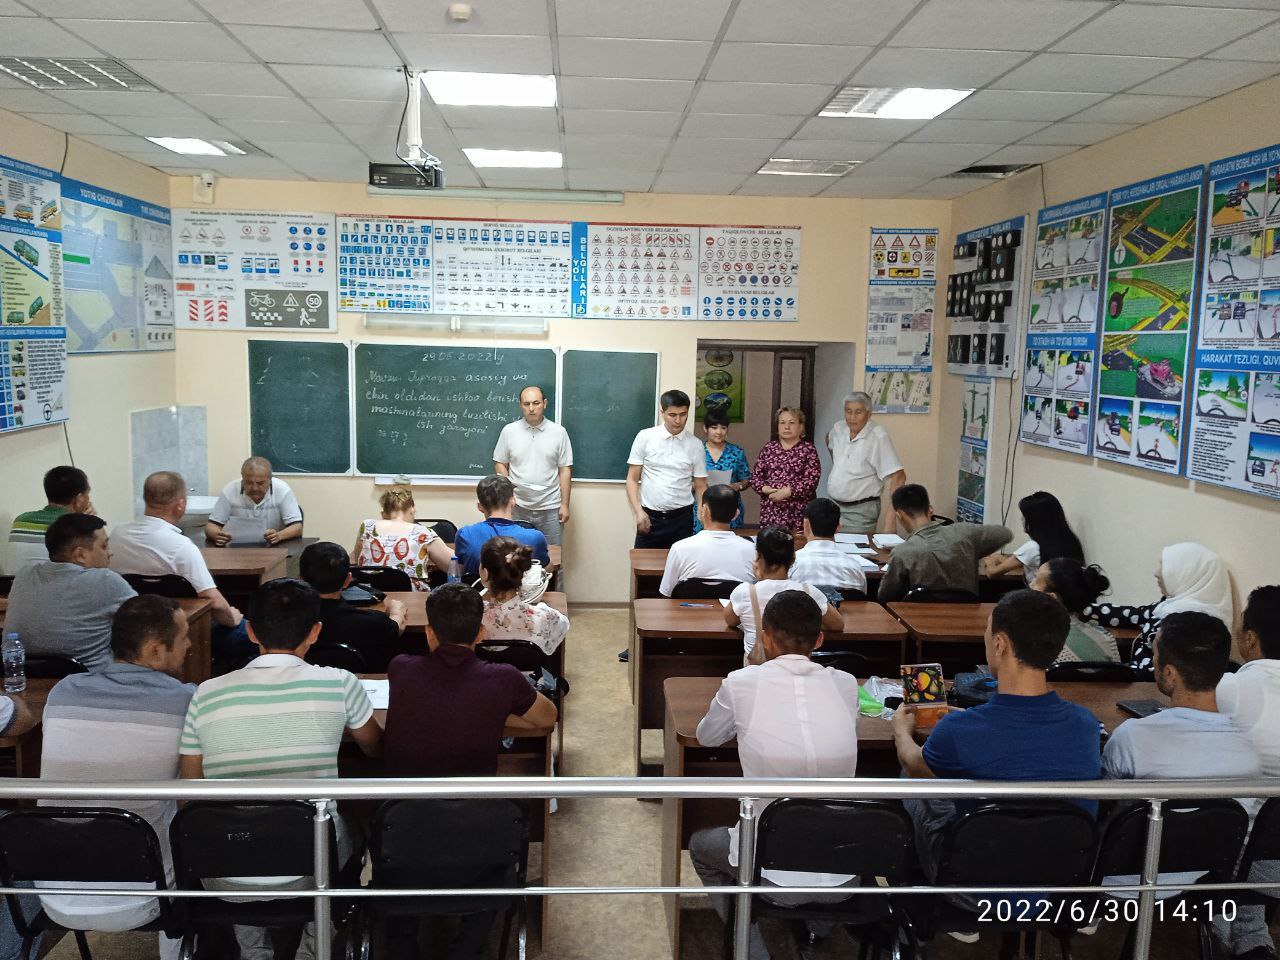 Students of Tashkent State Agrarian University in practice